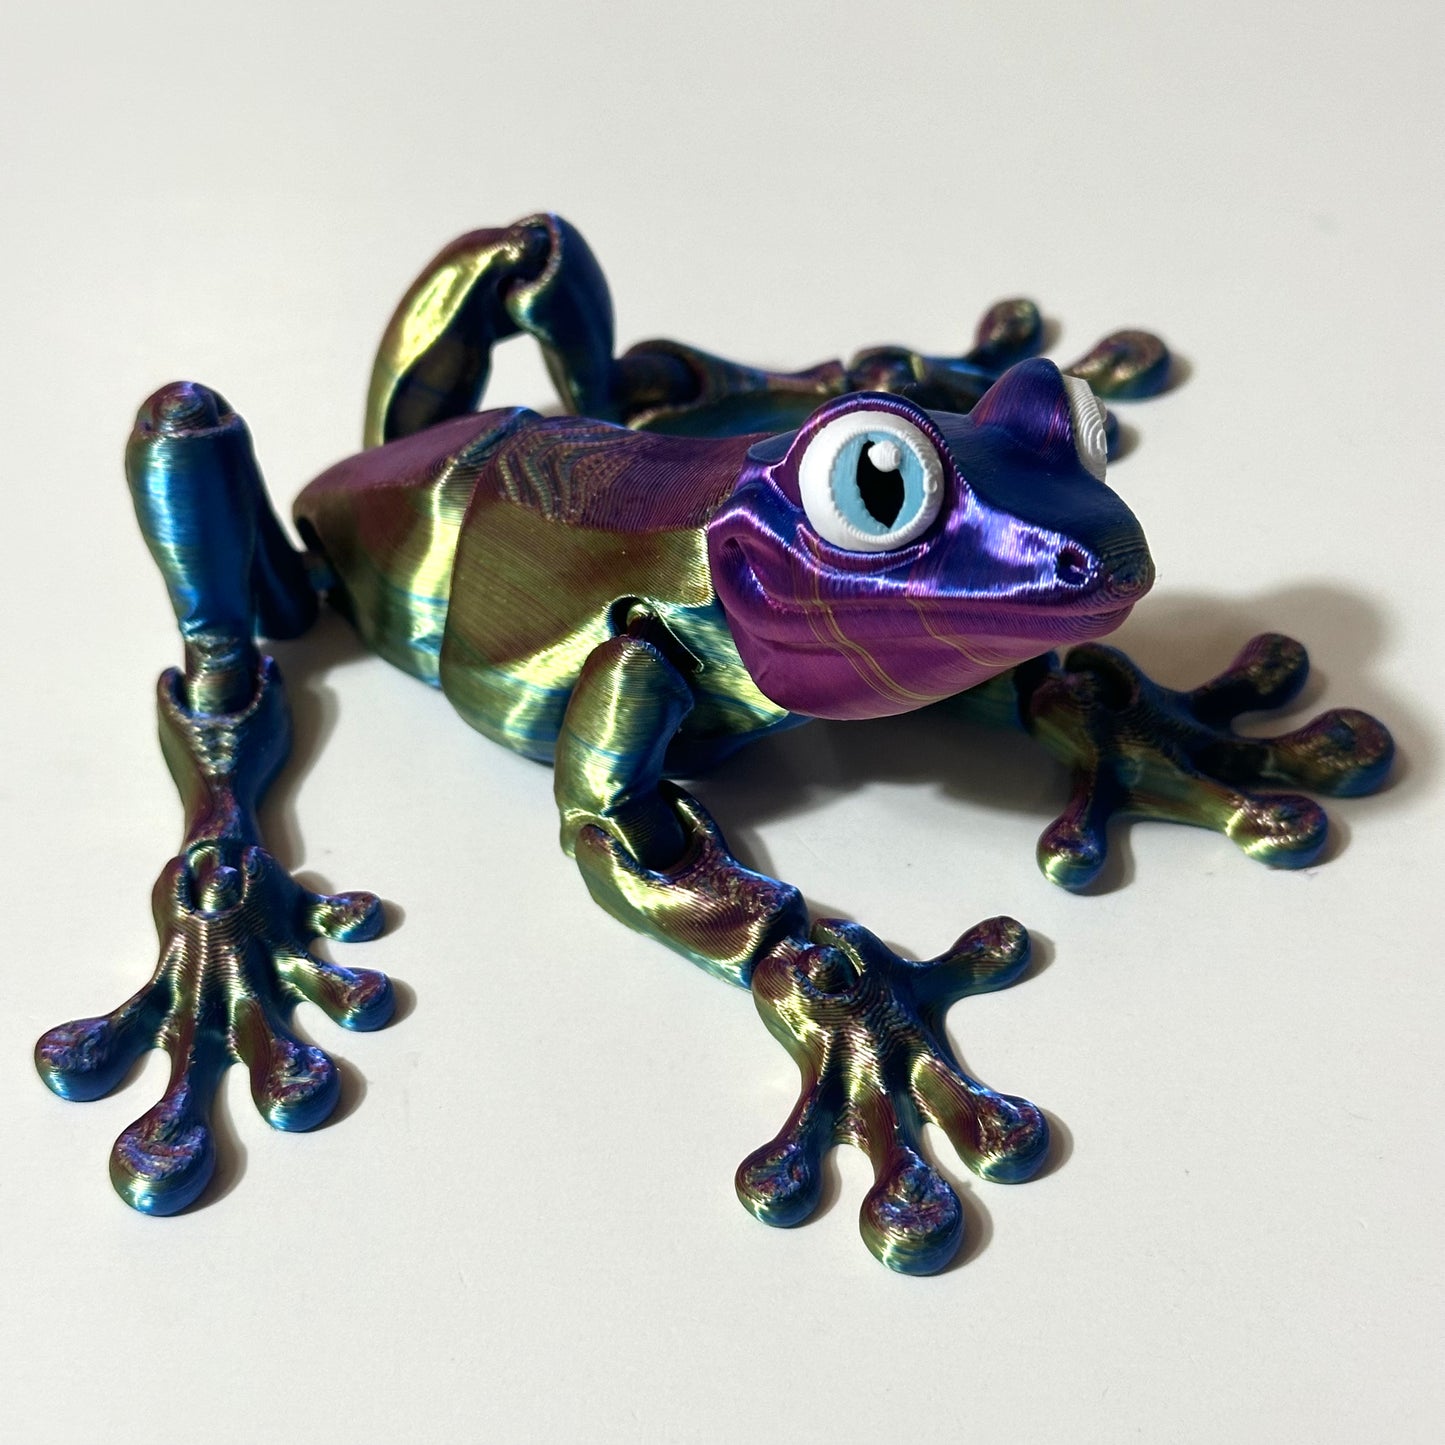 Tree Frog - 3D Printed Articulating Figure